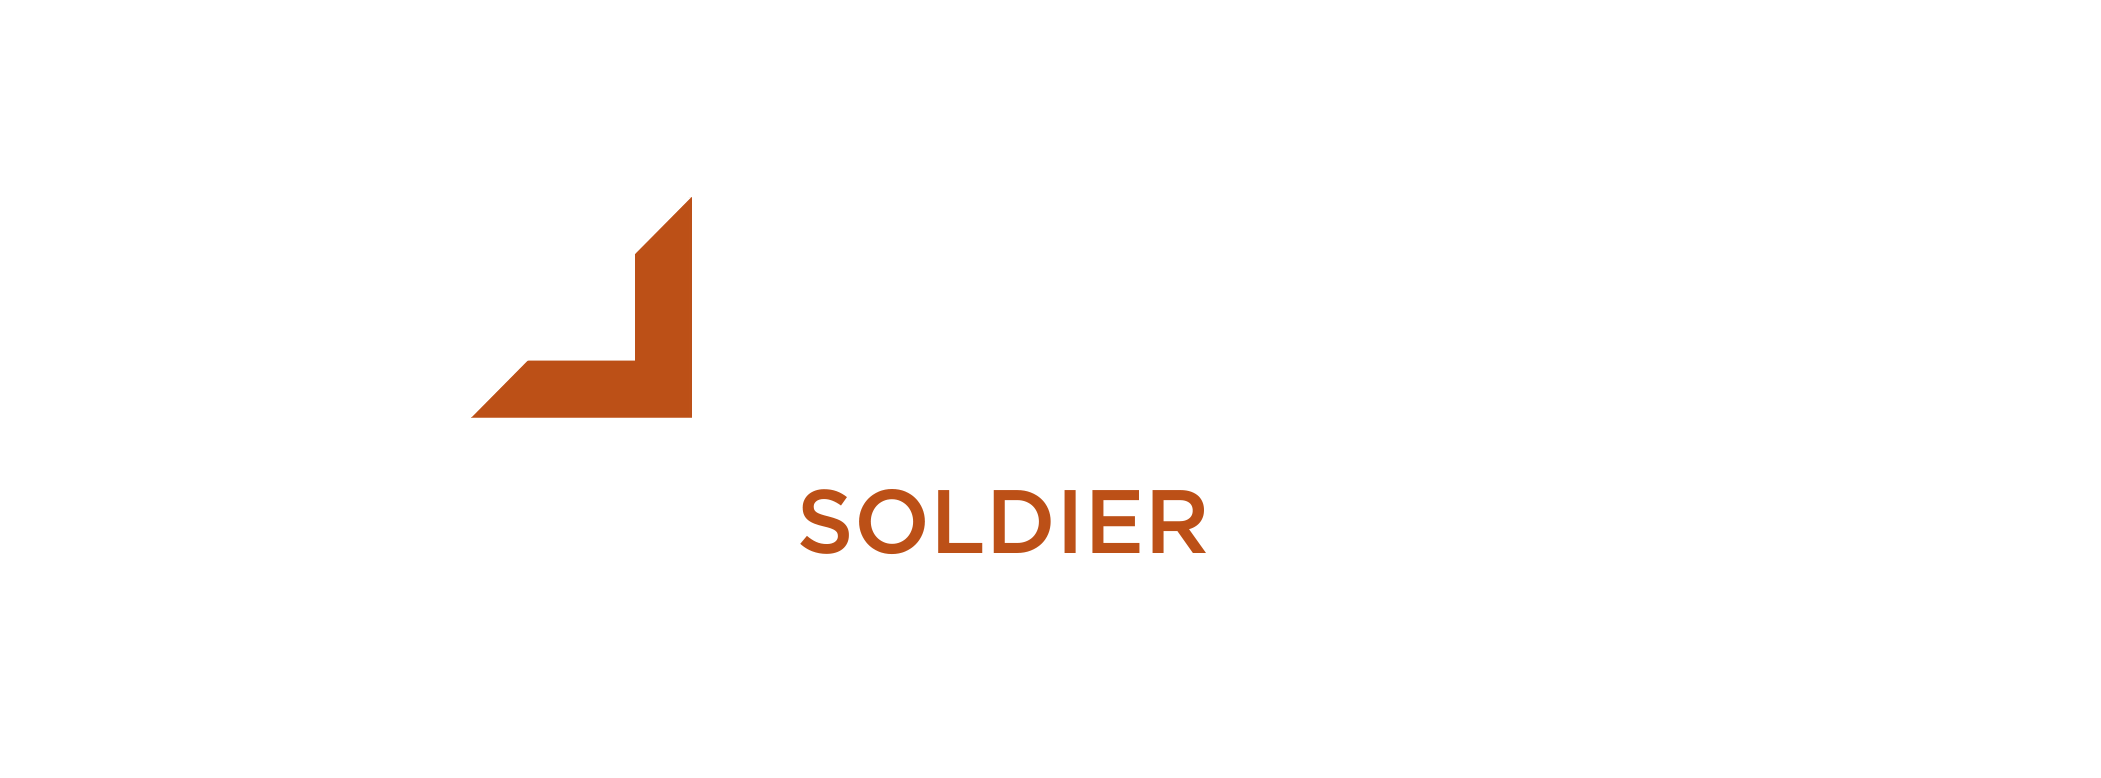 netro soldier optronics animation logo